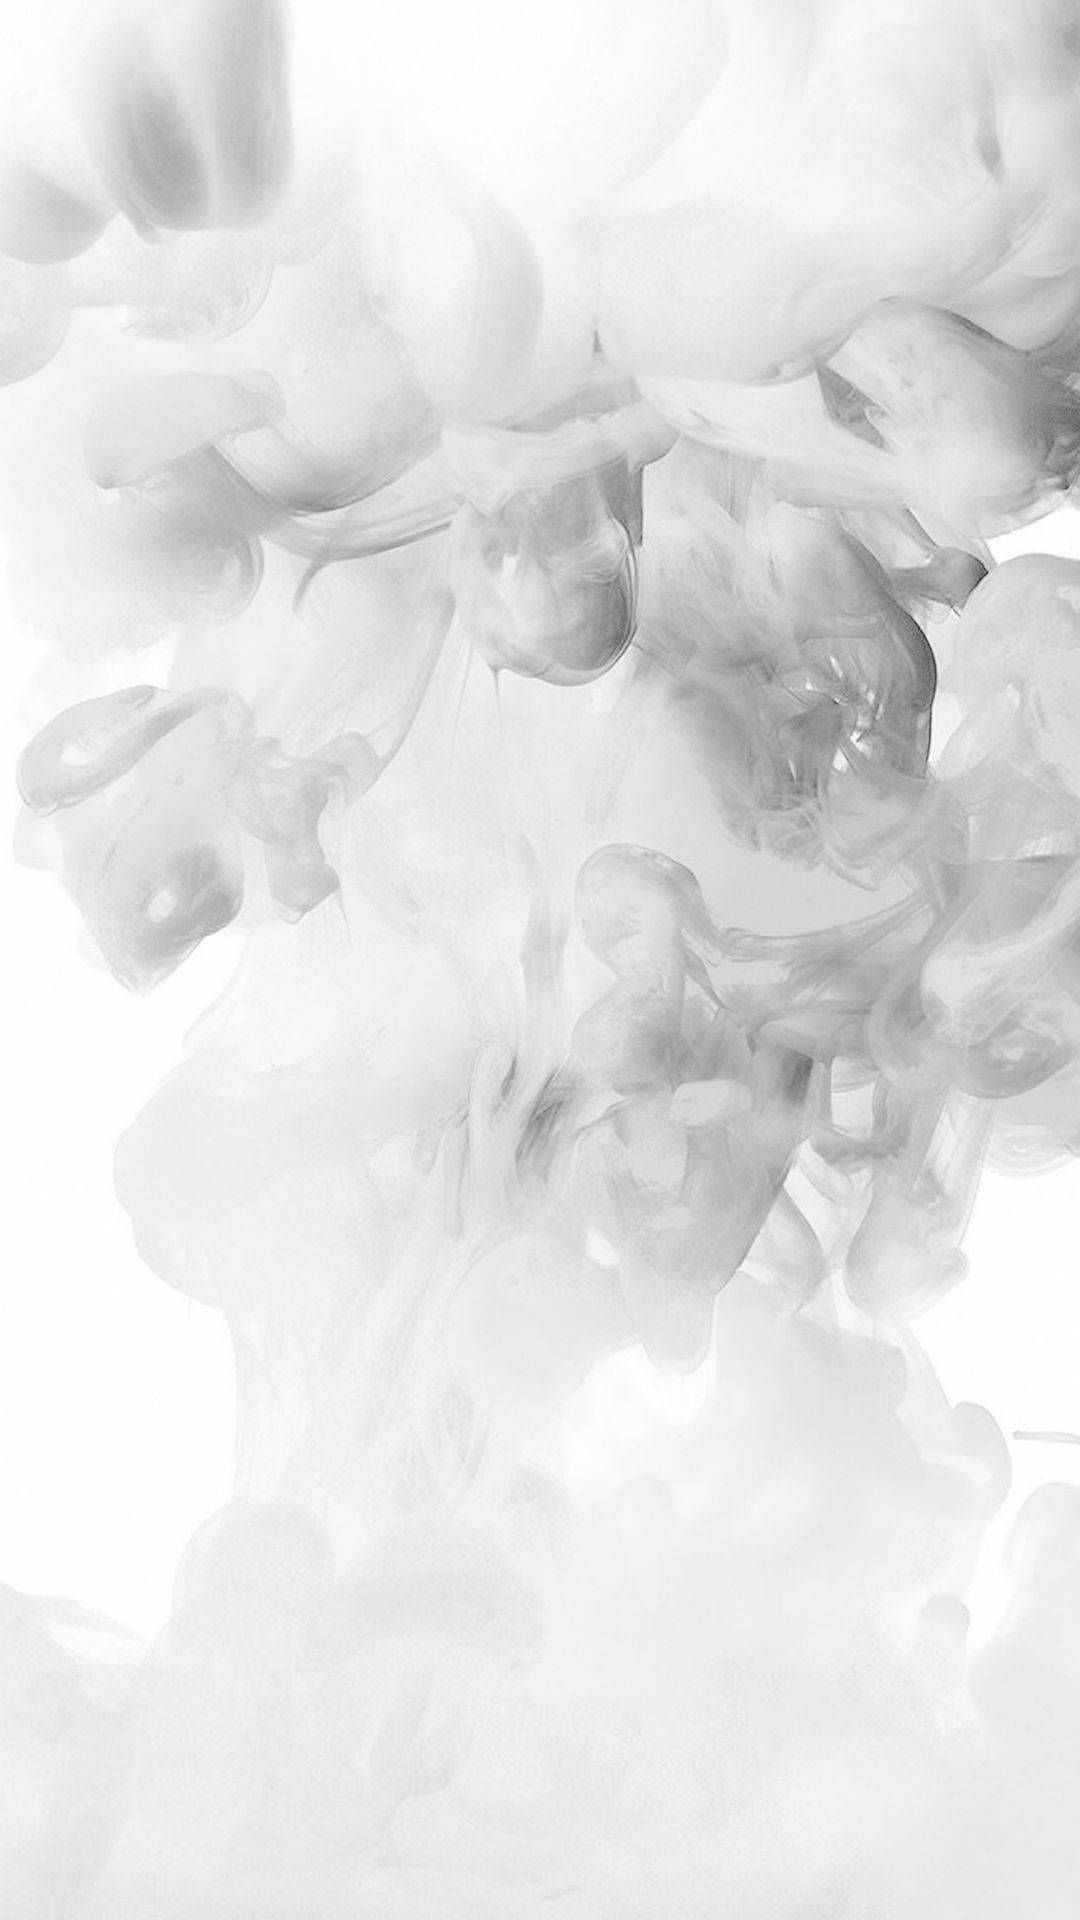 A Mystical White Fog Background